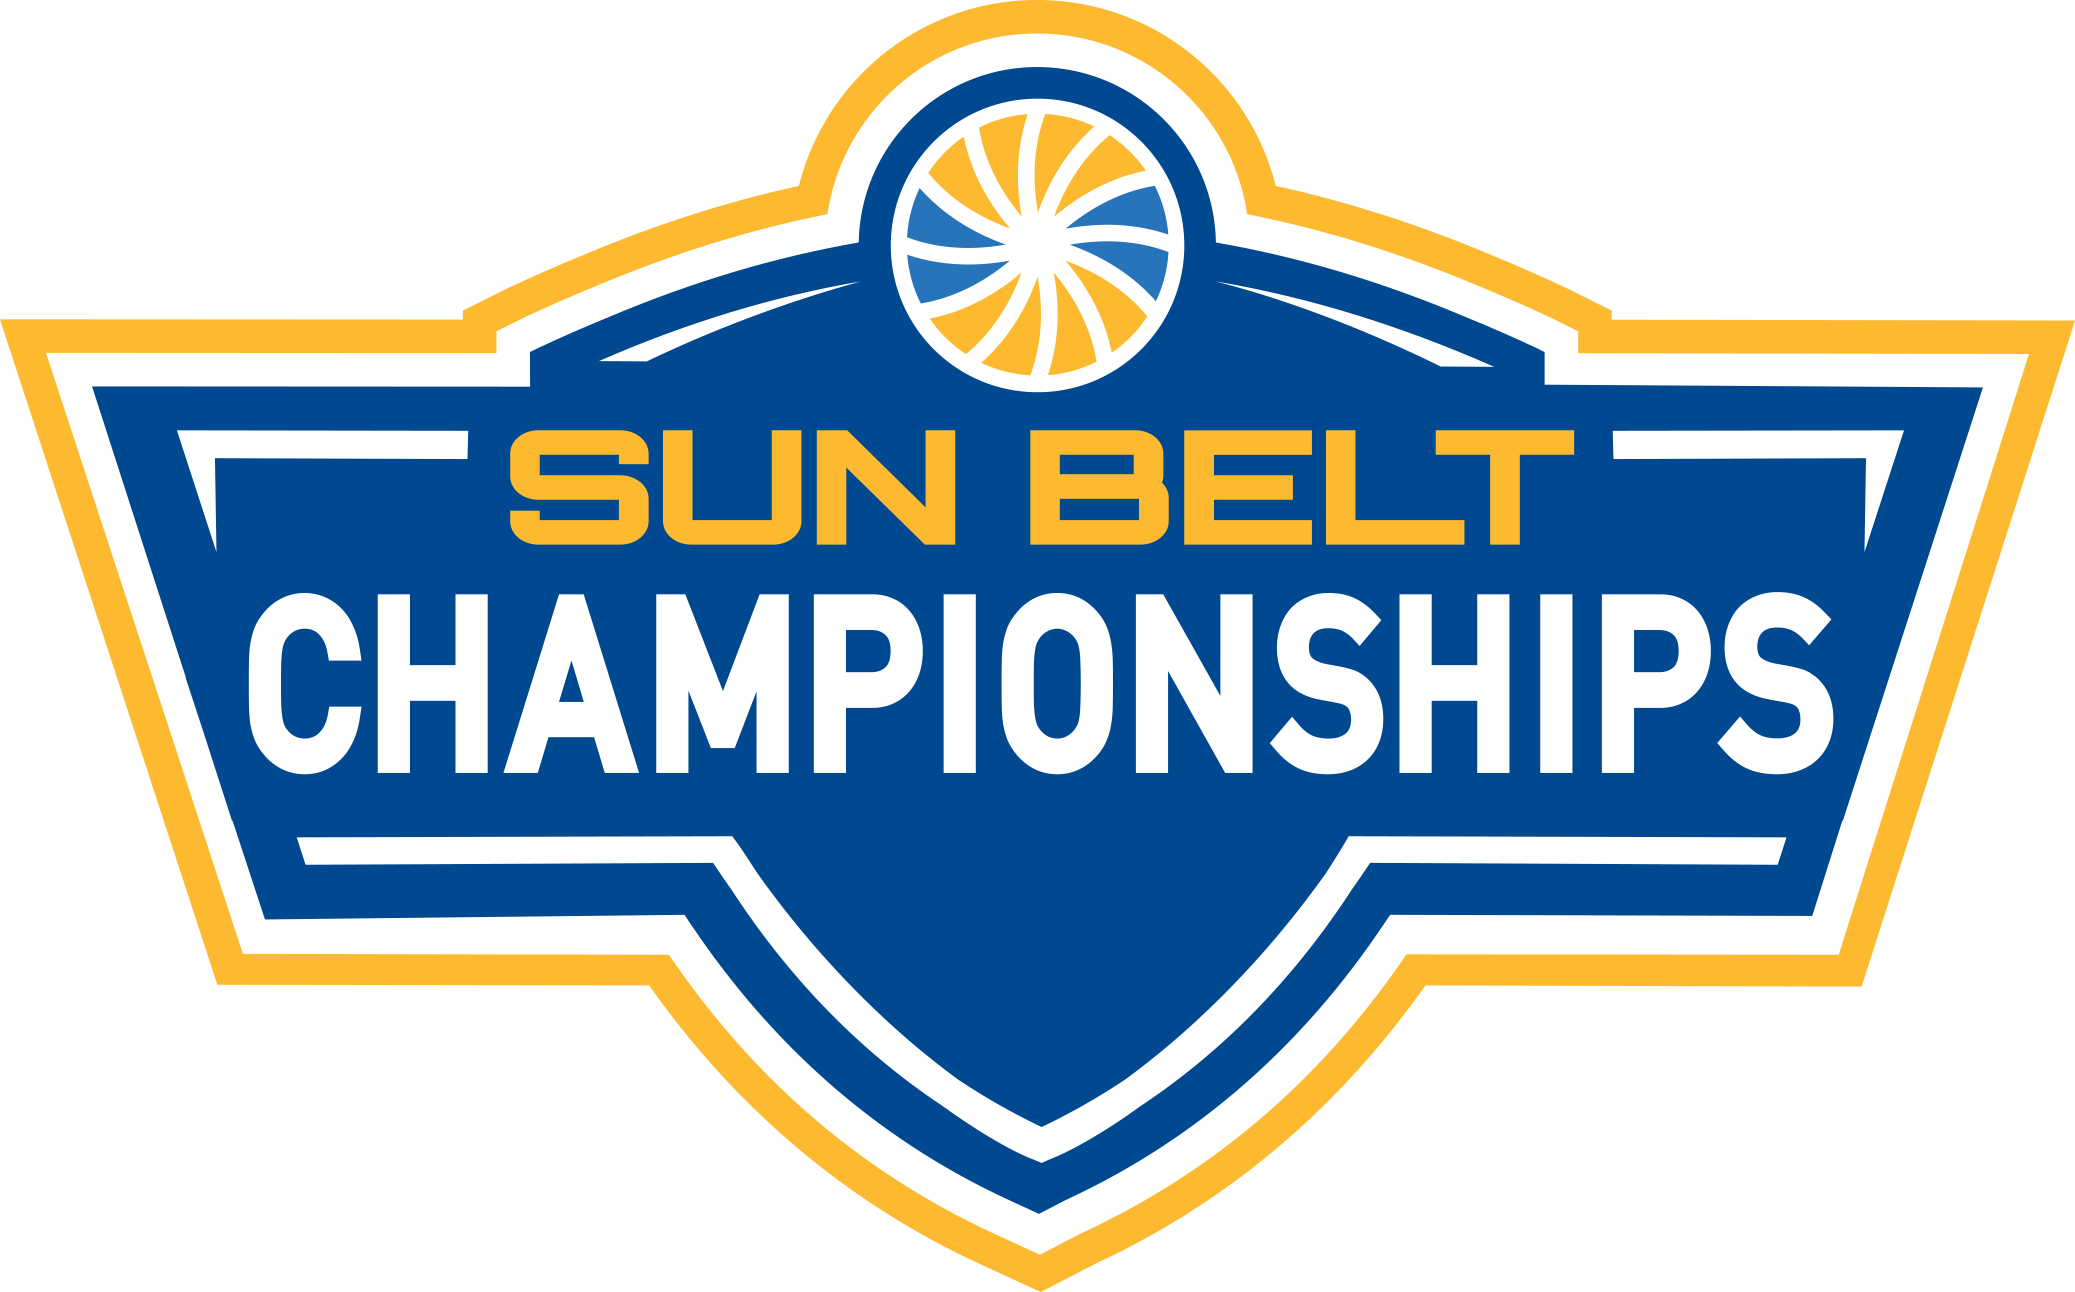 Championship Logo - Logos - Sun Belt Conference